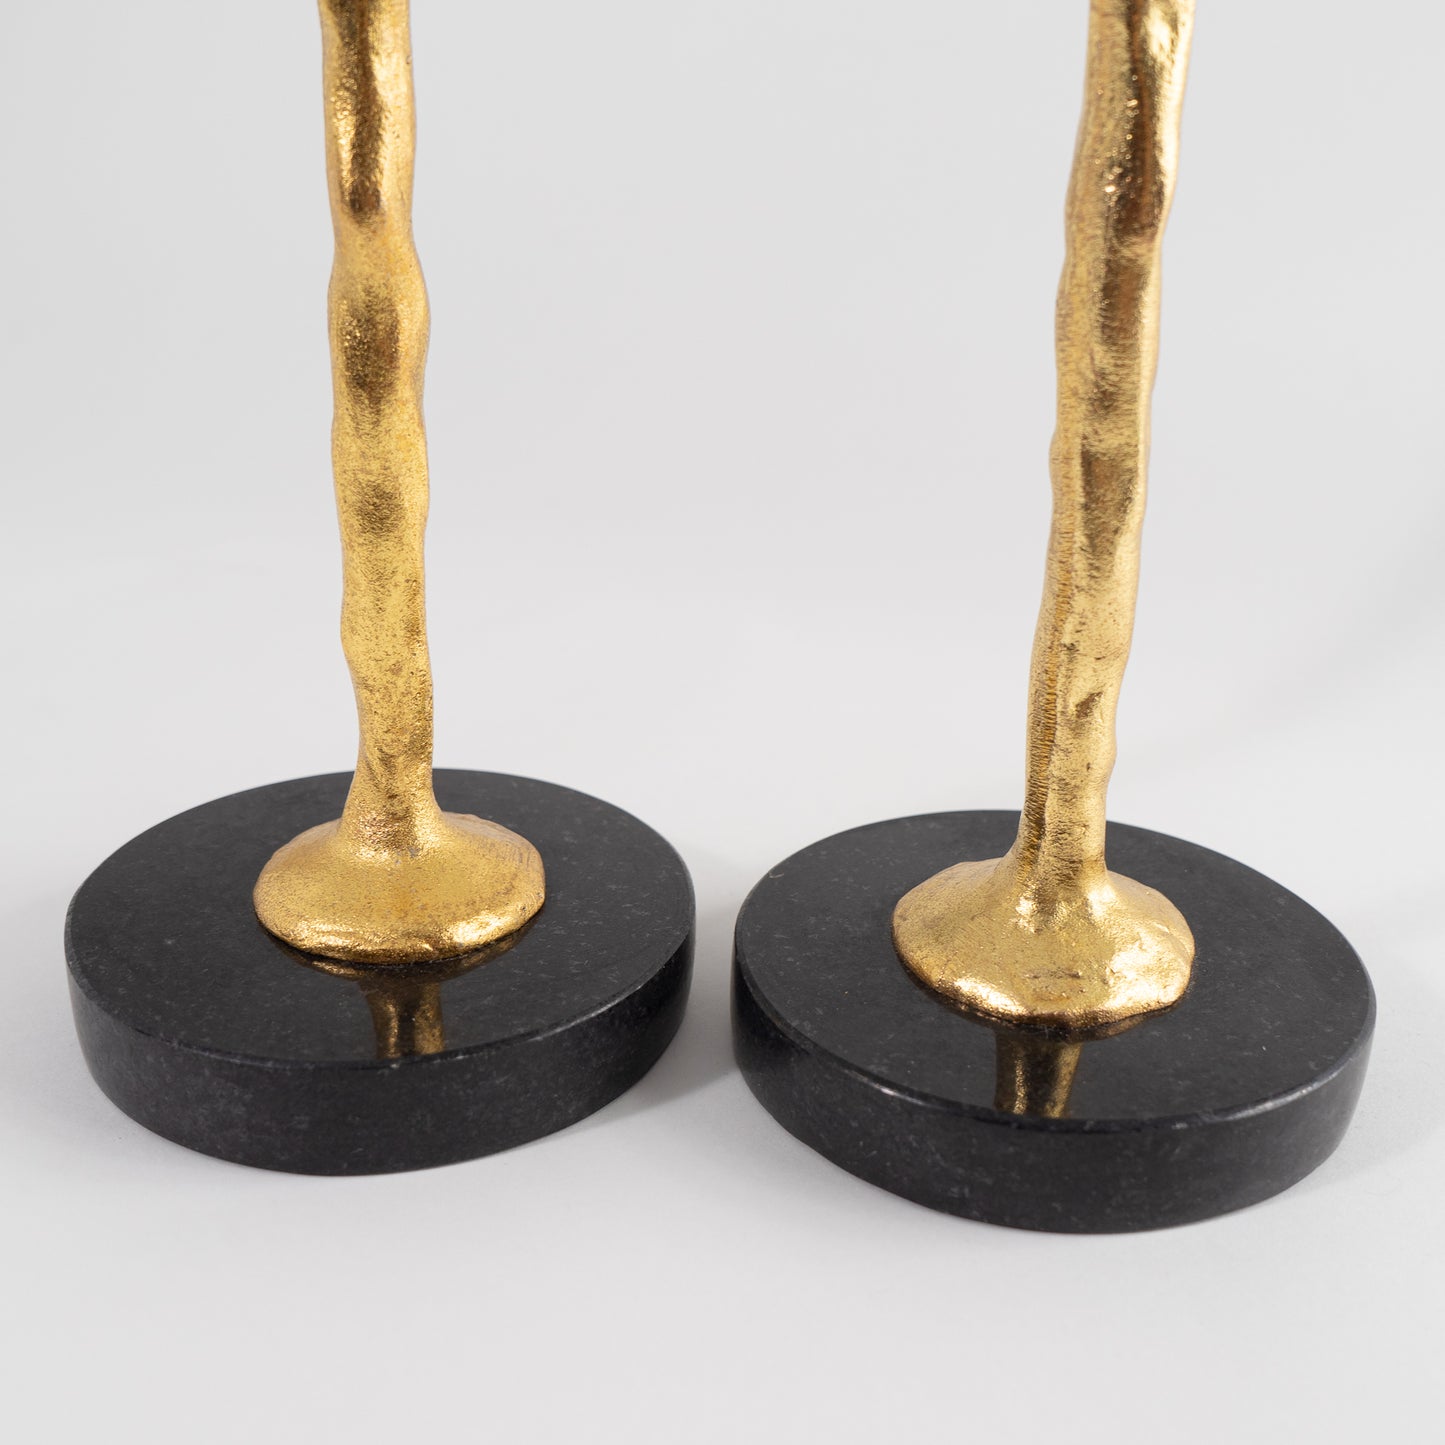 Michael Aram Adam & Eve Candle Holders - Gold and Black Granite